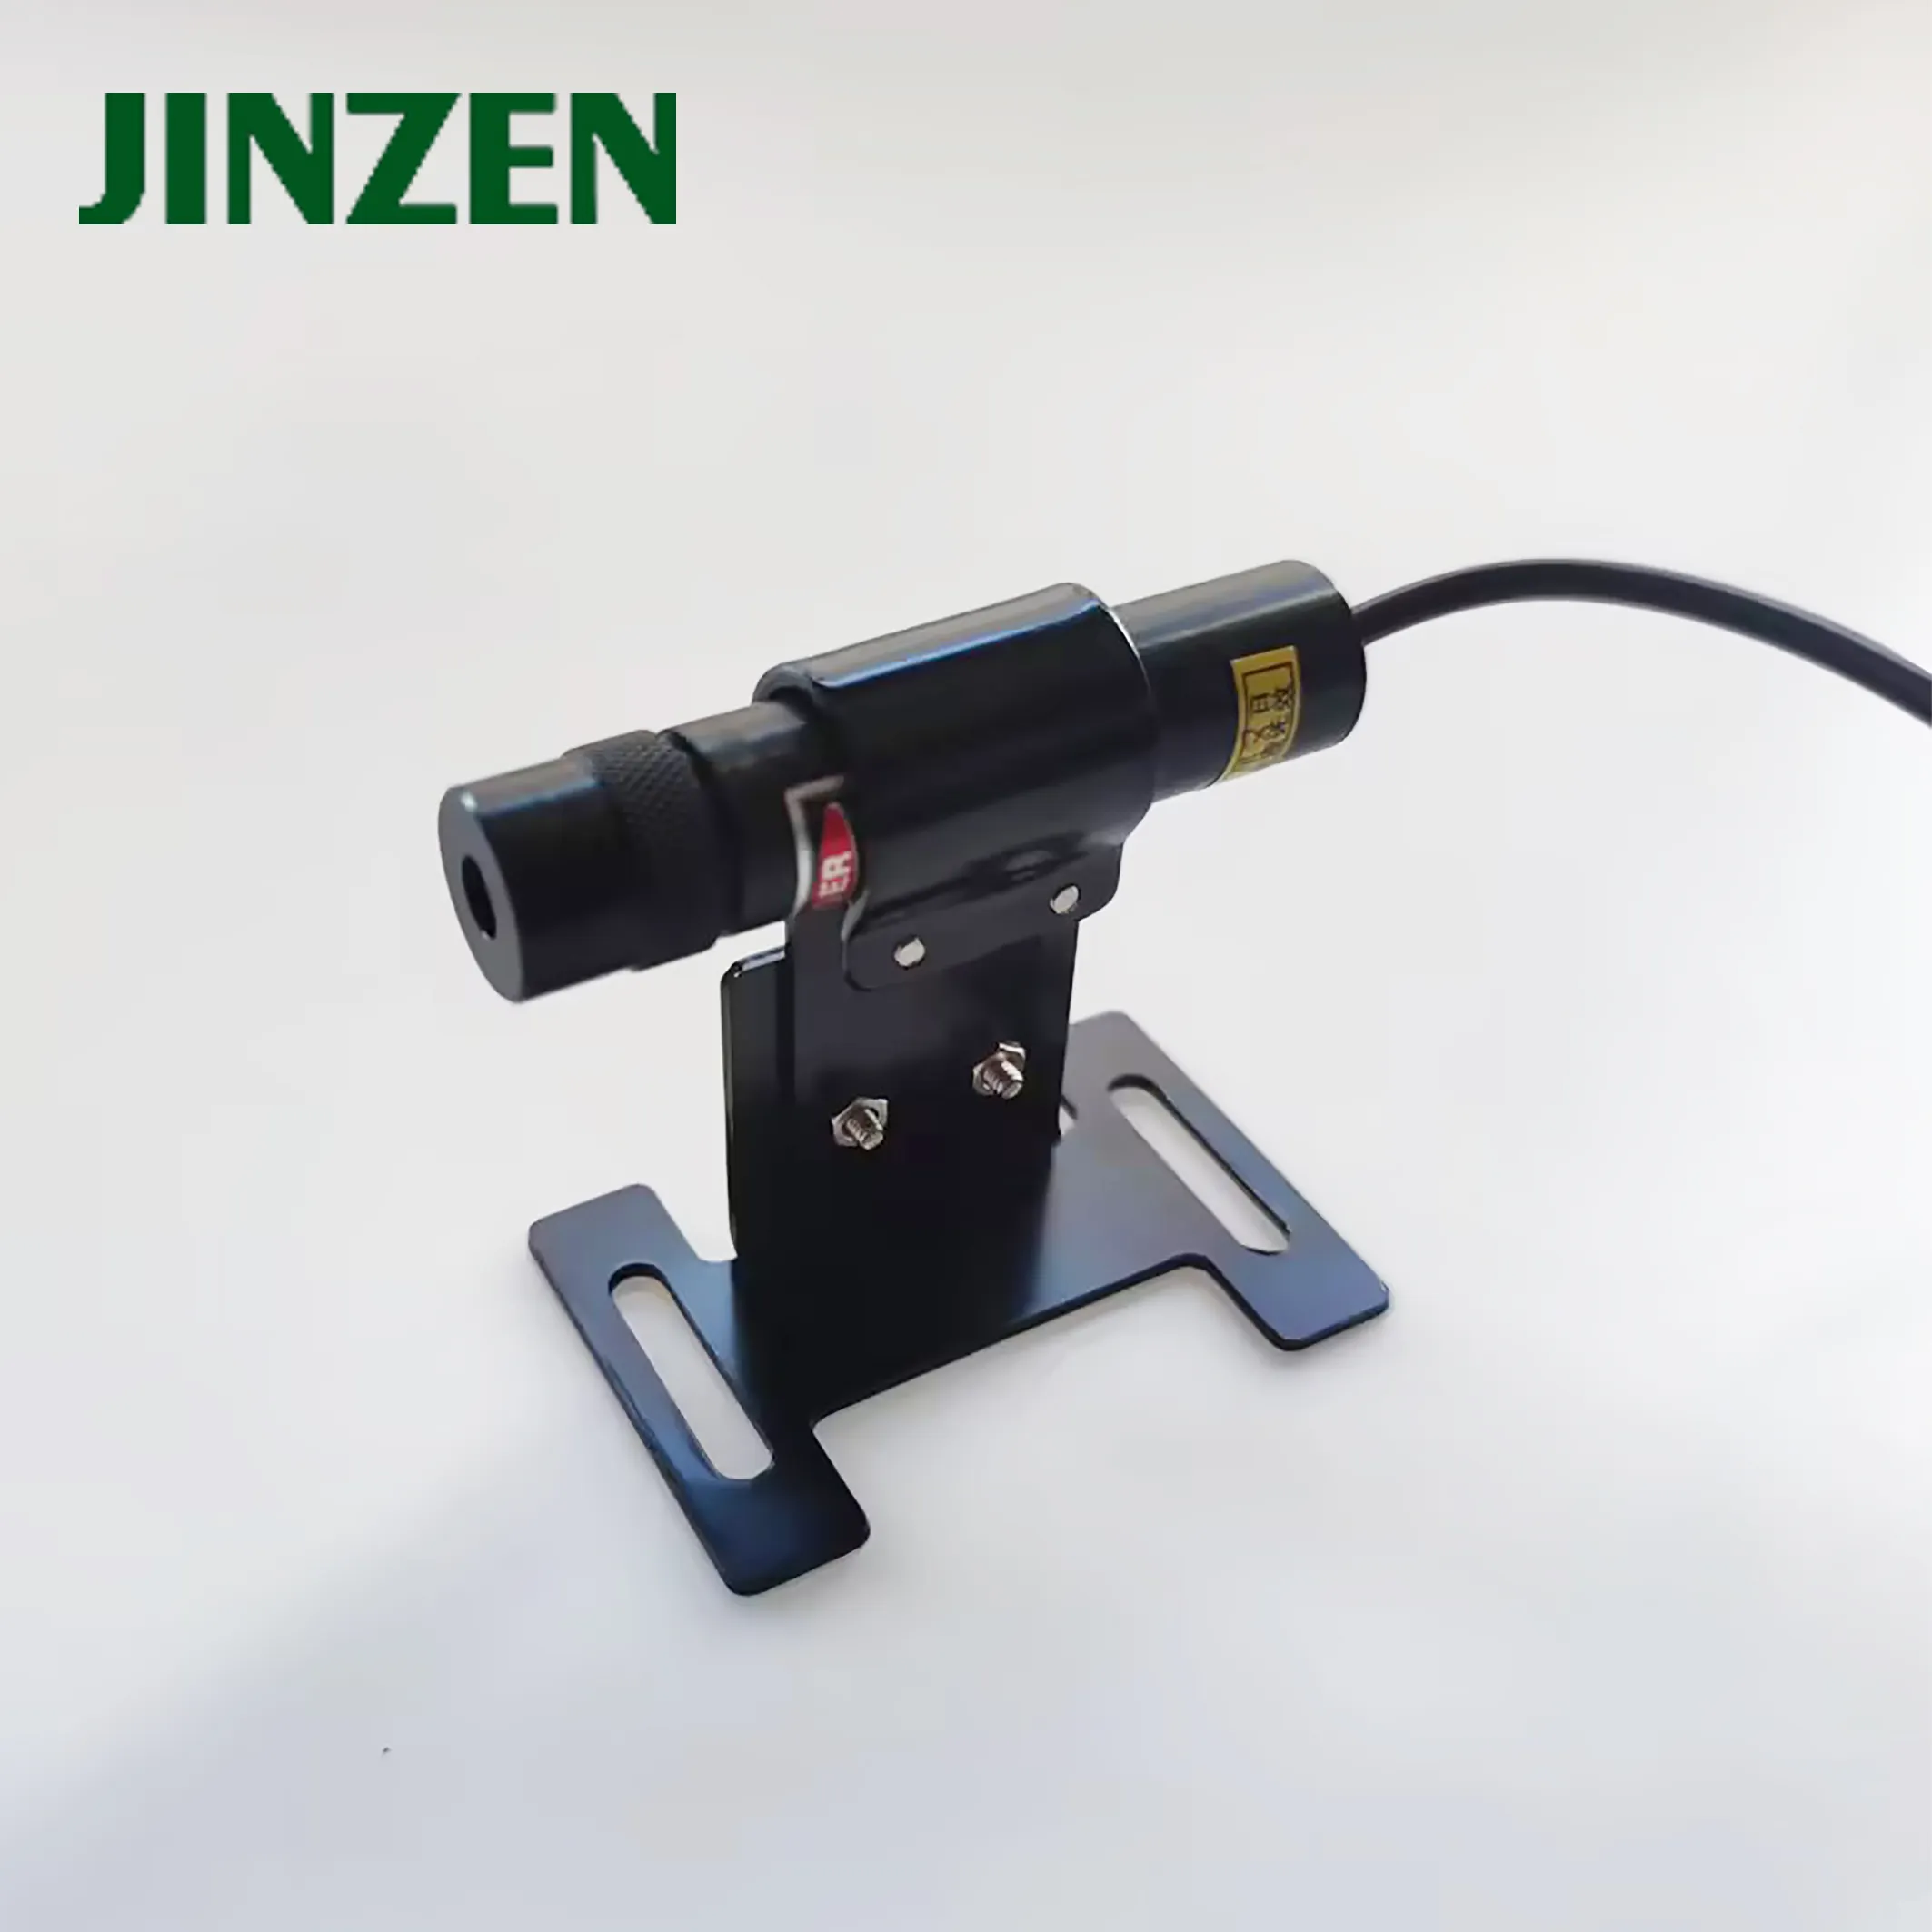 LASER LIGHT "+" GREEN JINZEN JZ-70912 GOOD QUALITY SEWING MACHINE PARTS